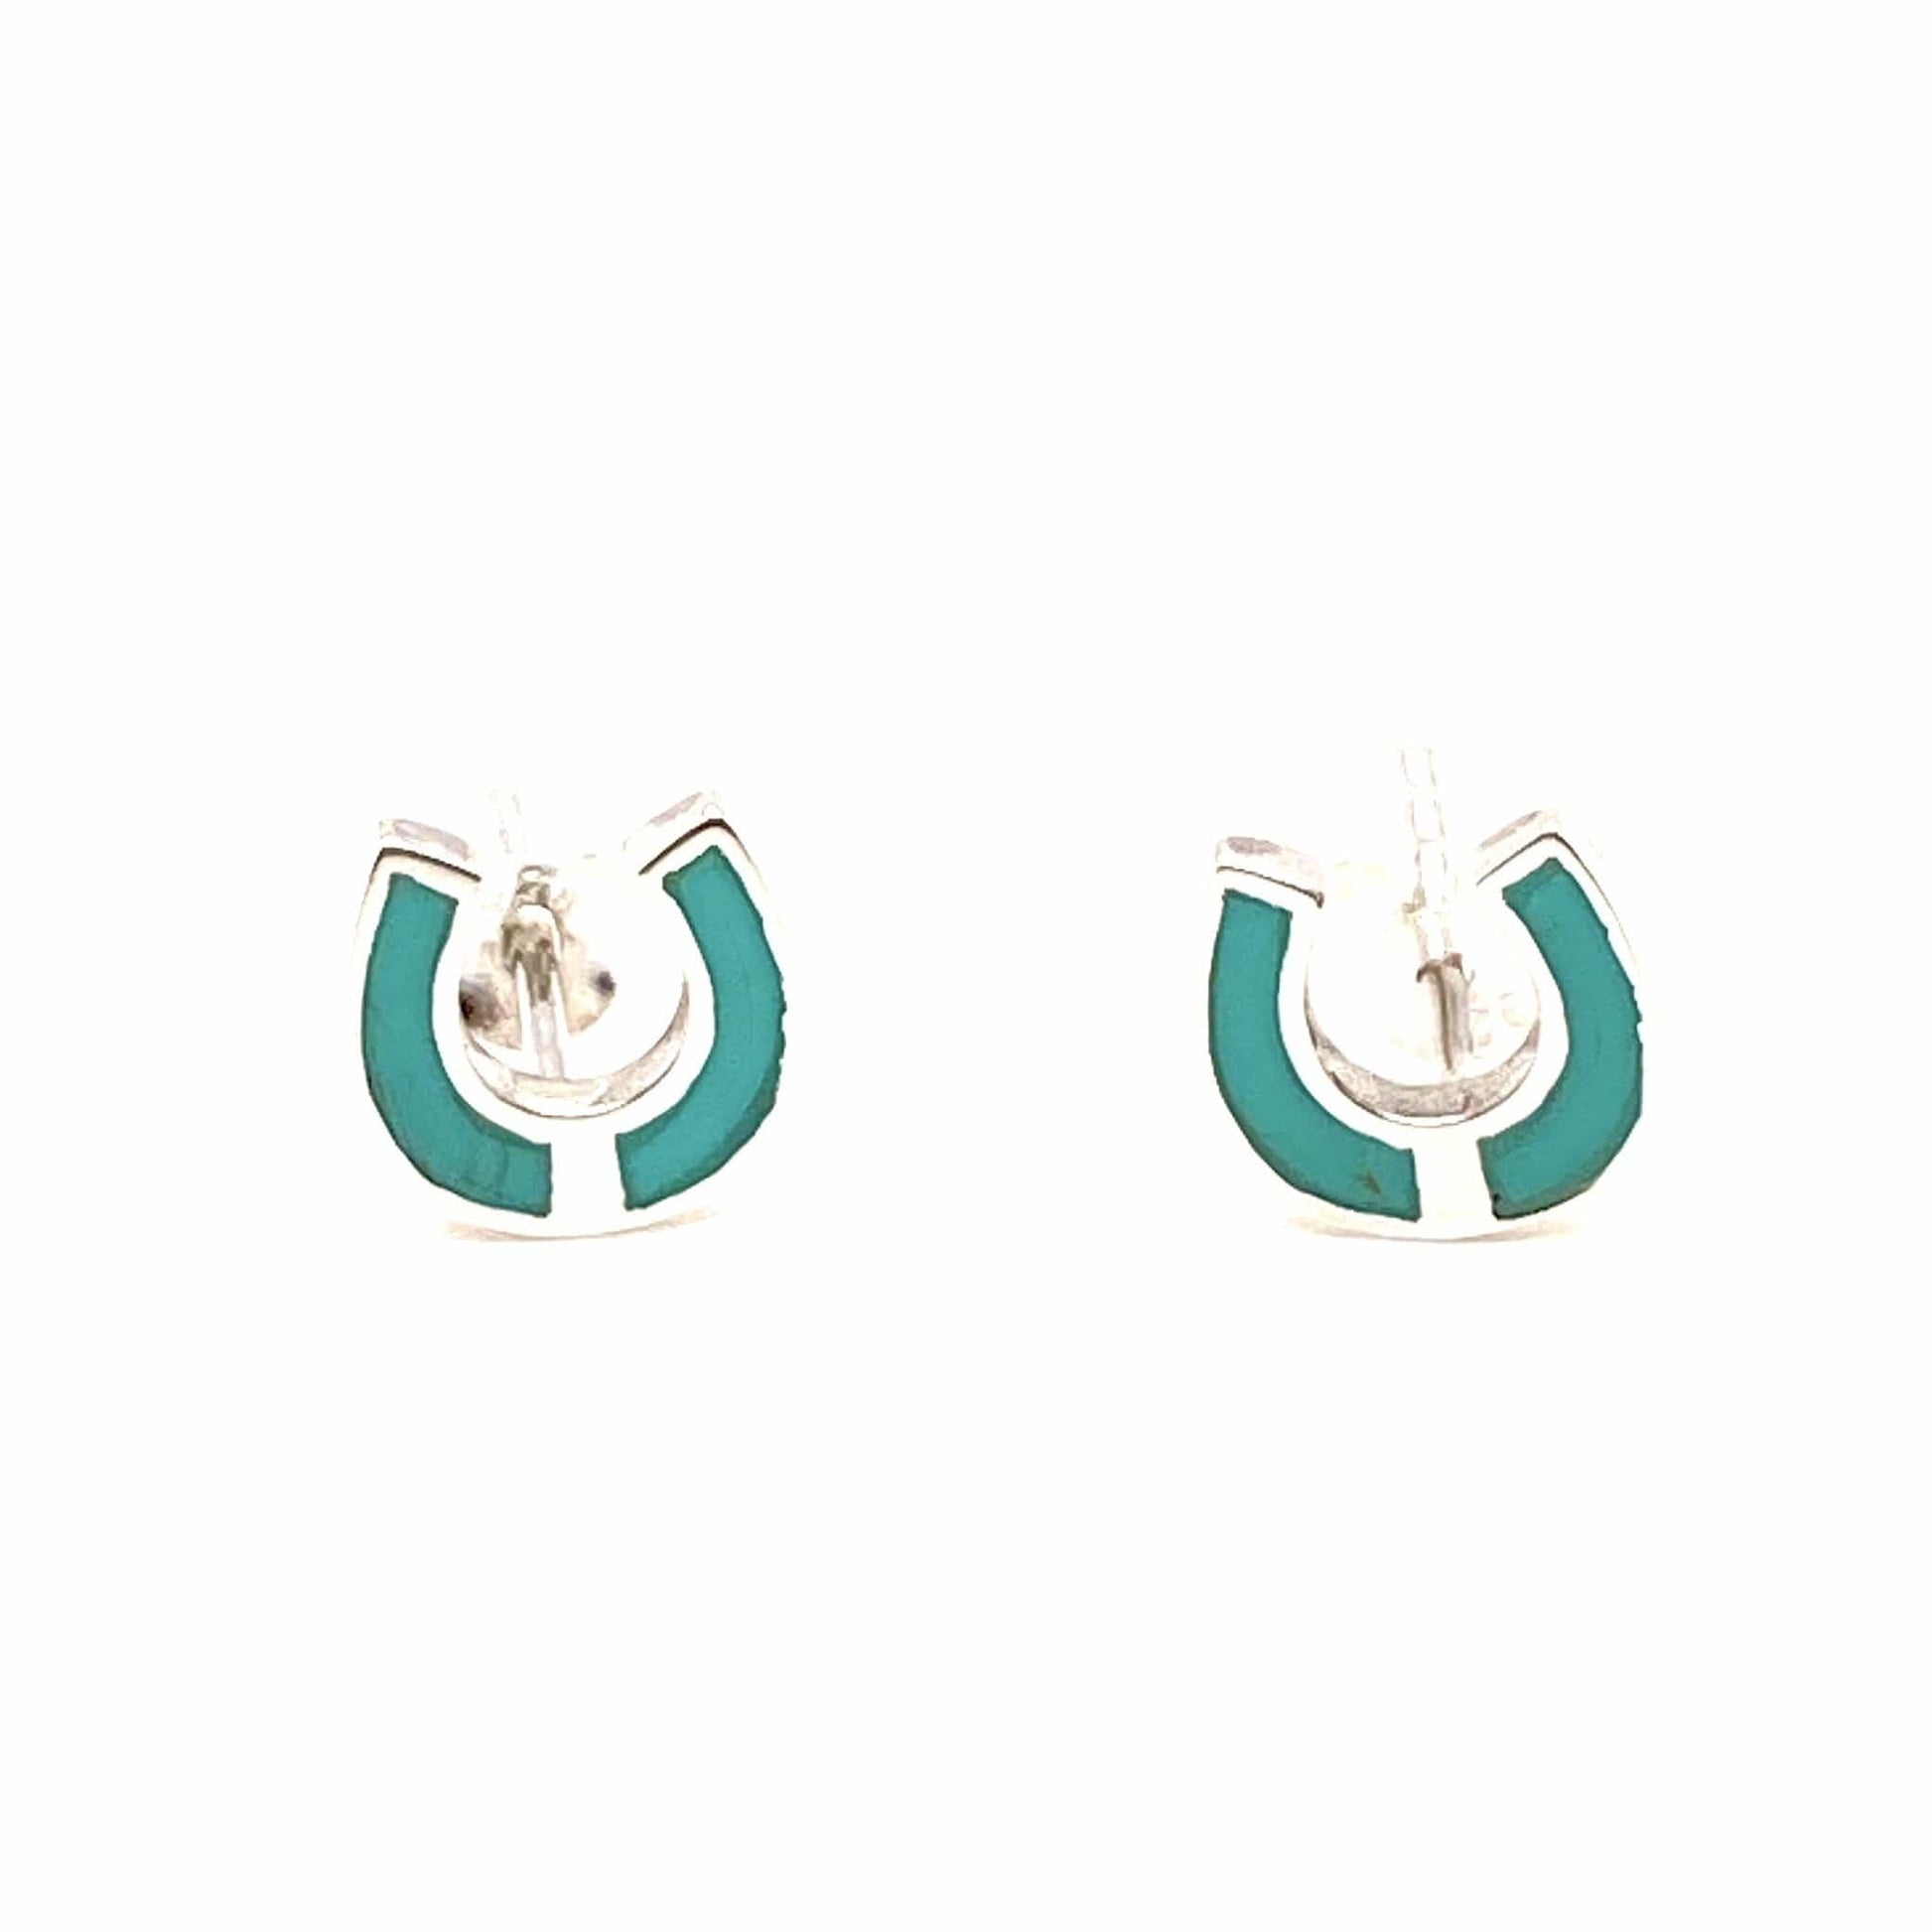 PEGASUS JEWELLERY Earrings Turquoise Horseshoe Earrings